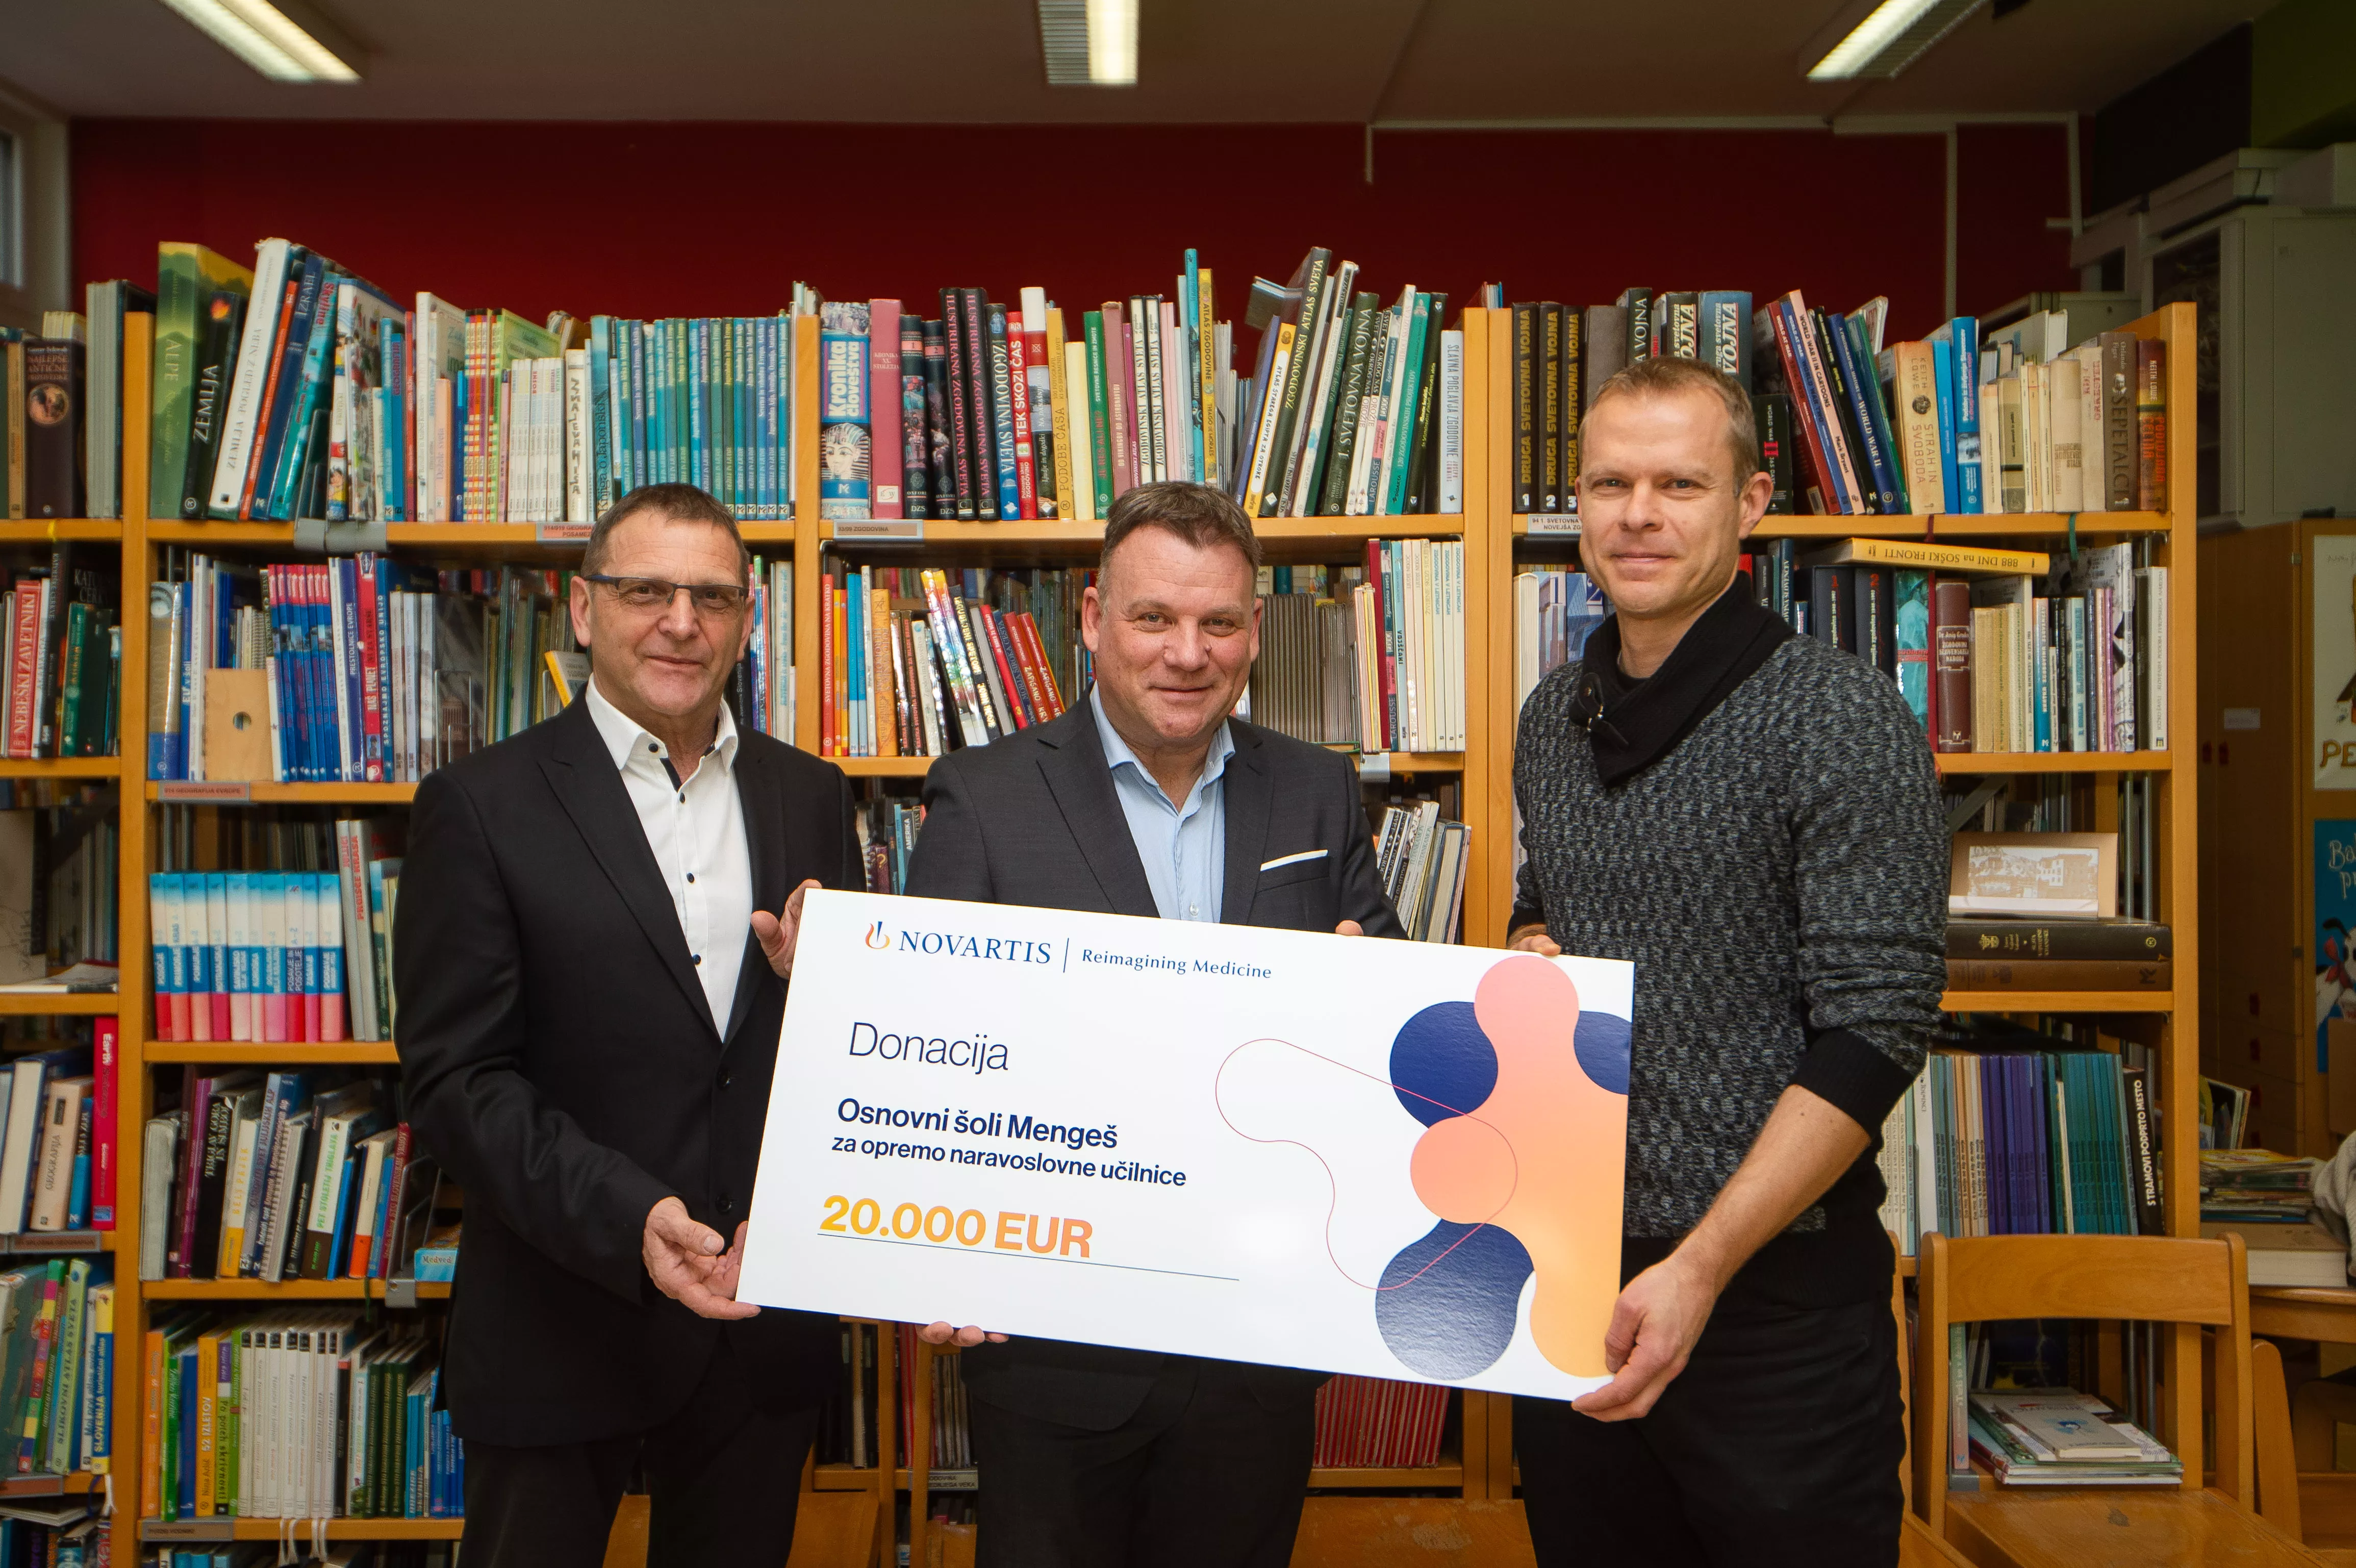 Novartis presents a donation of EUR 20,000 to Mengeš Primary School